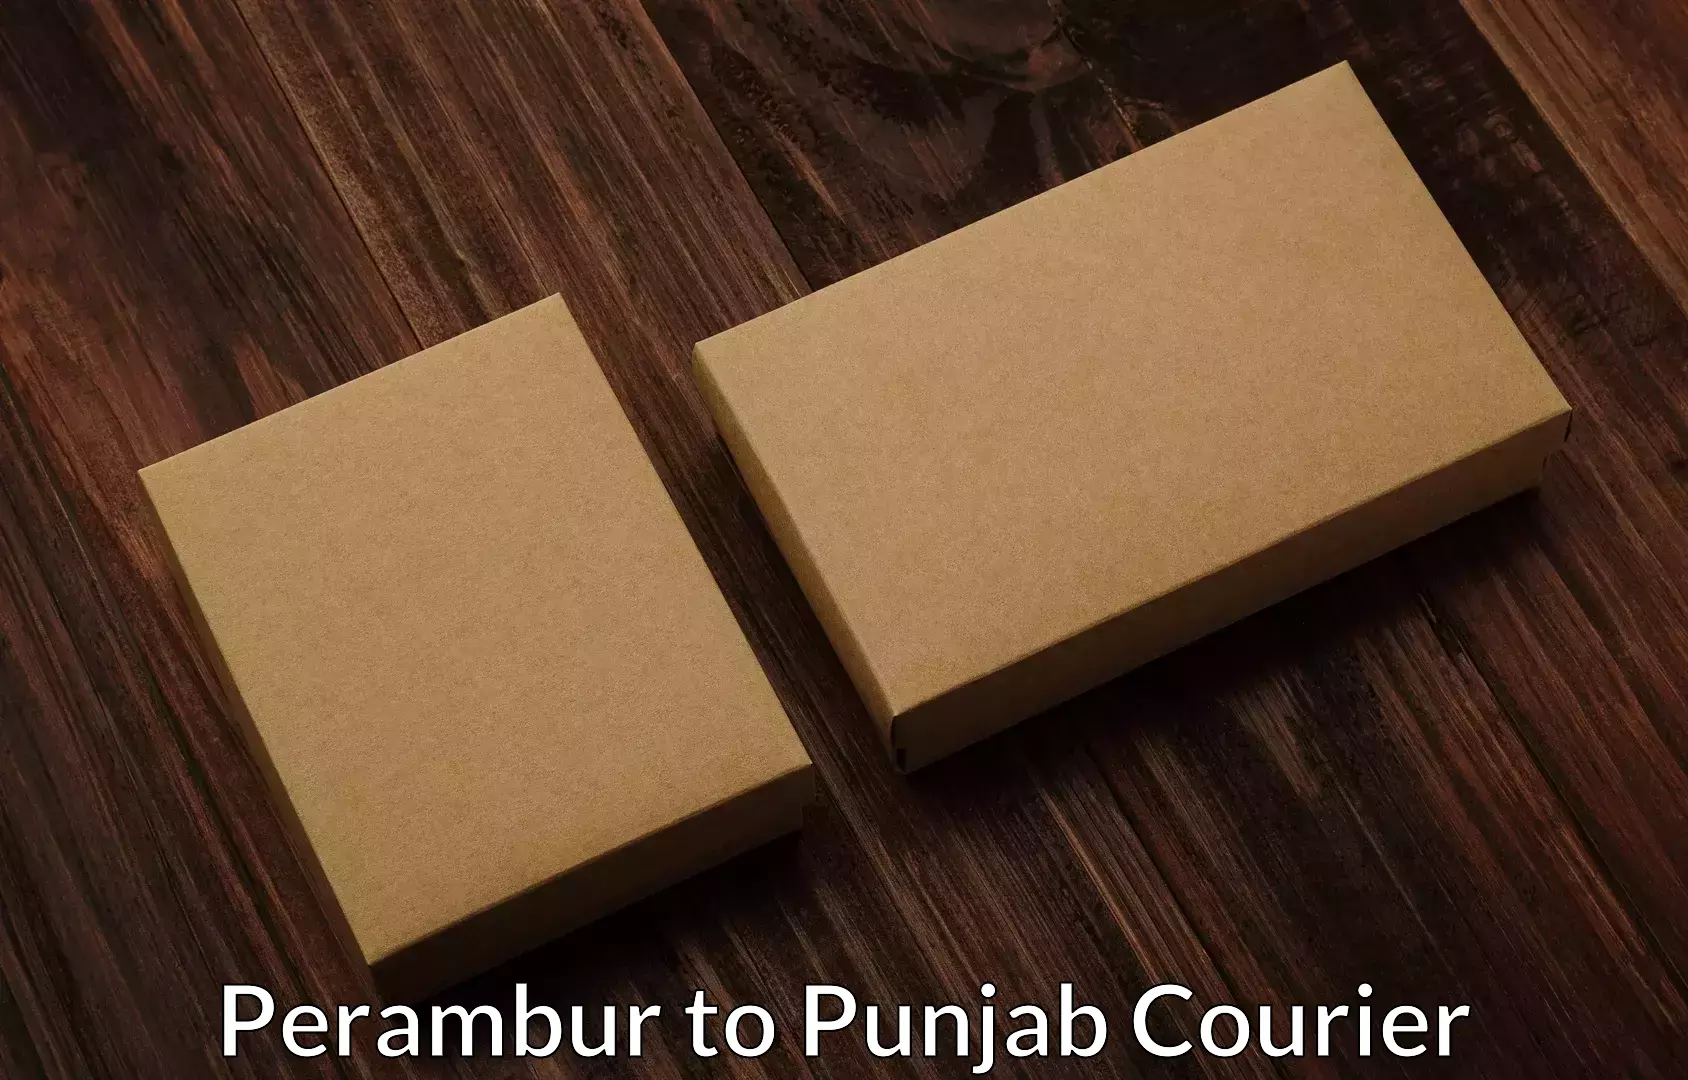 Cost-effective moving options Perambur to Punjab